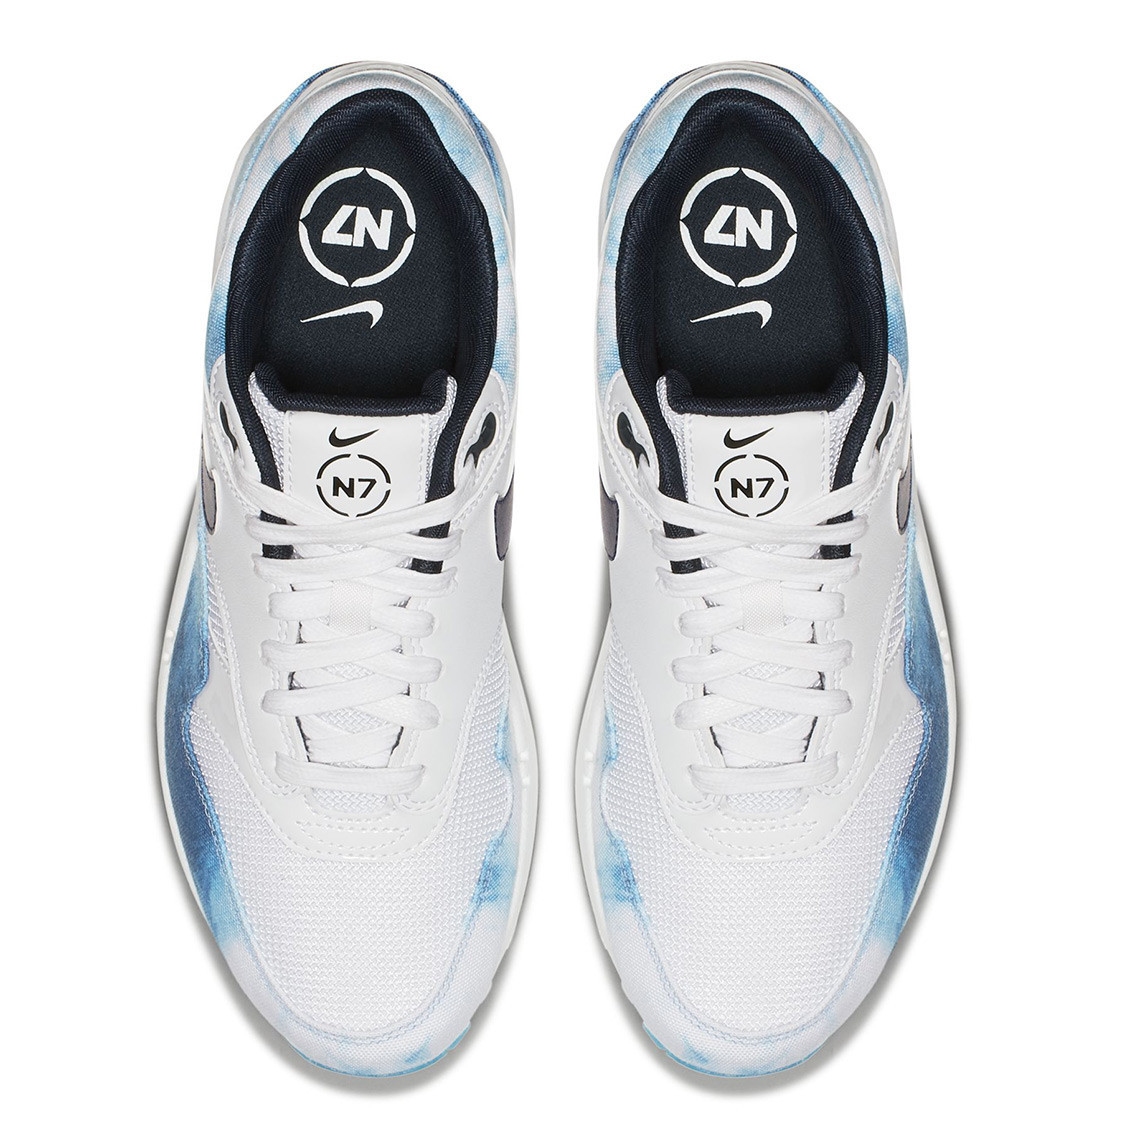 Summer Acid Wash for Nike's N7 Air Max 1